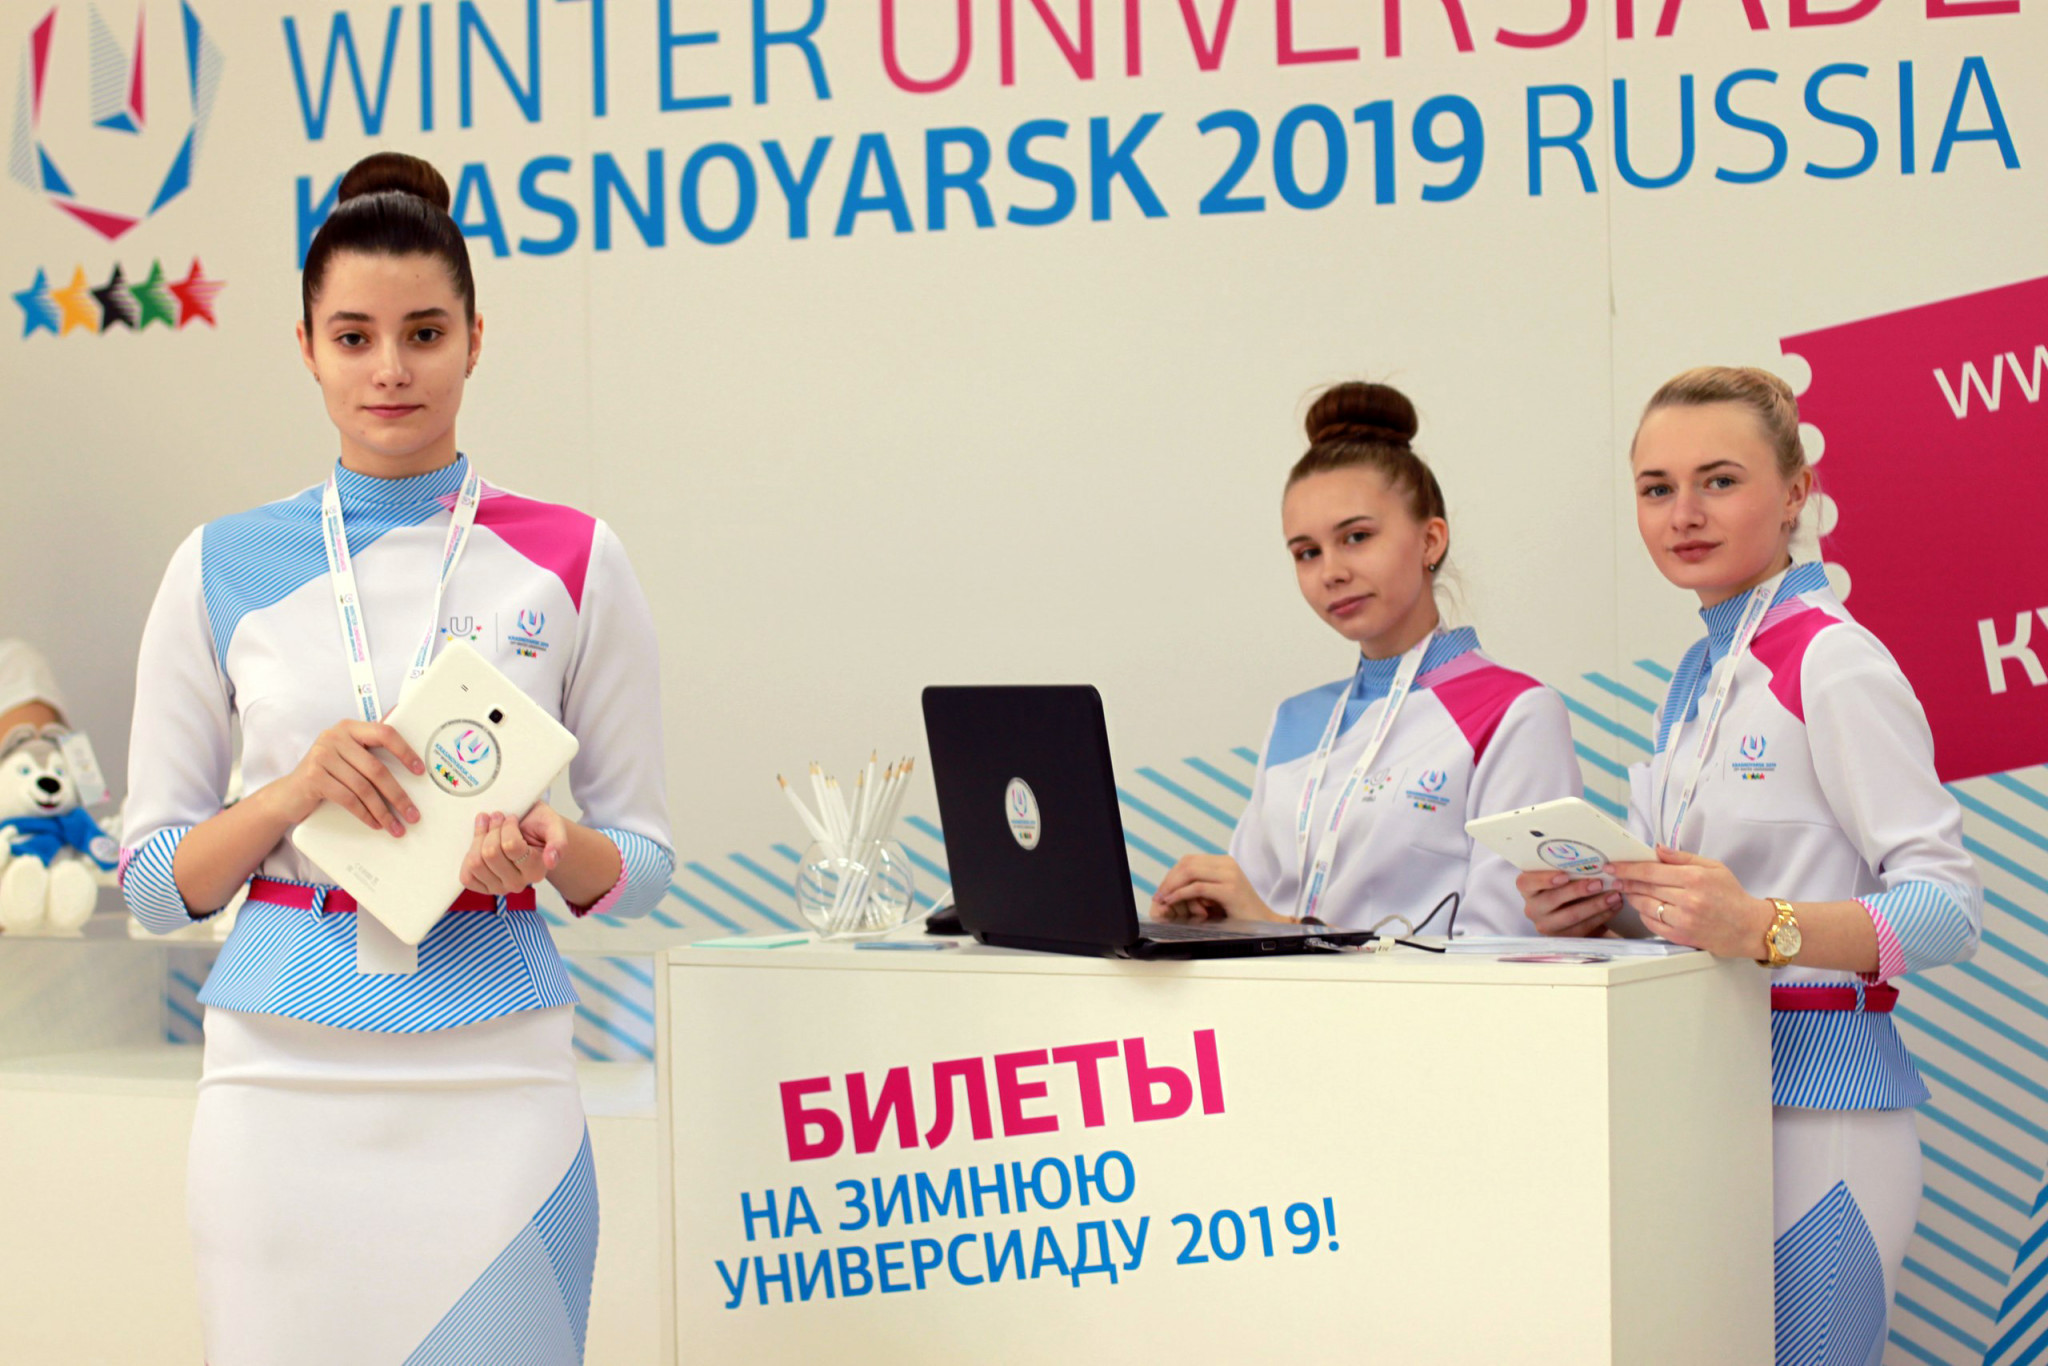 More than 50 per cent of tickets sold for Krasnoyarsk 2019